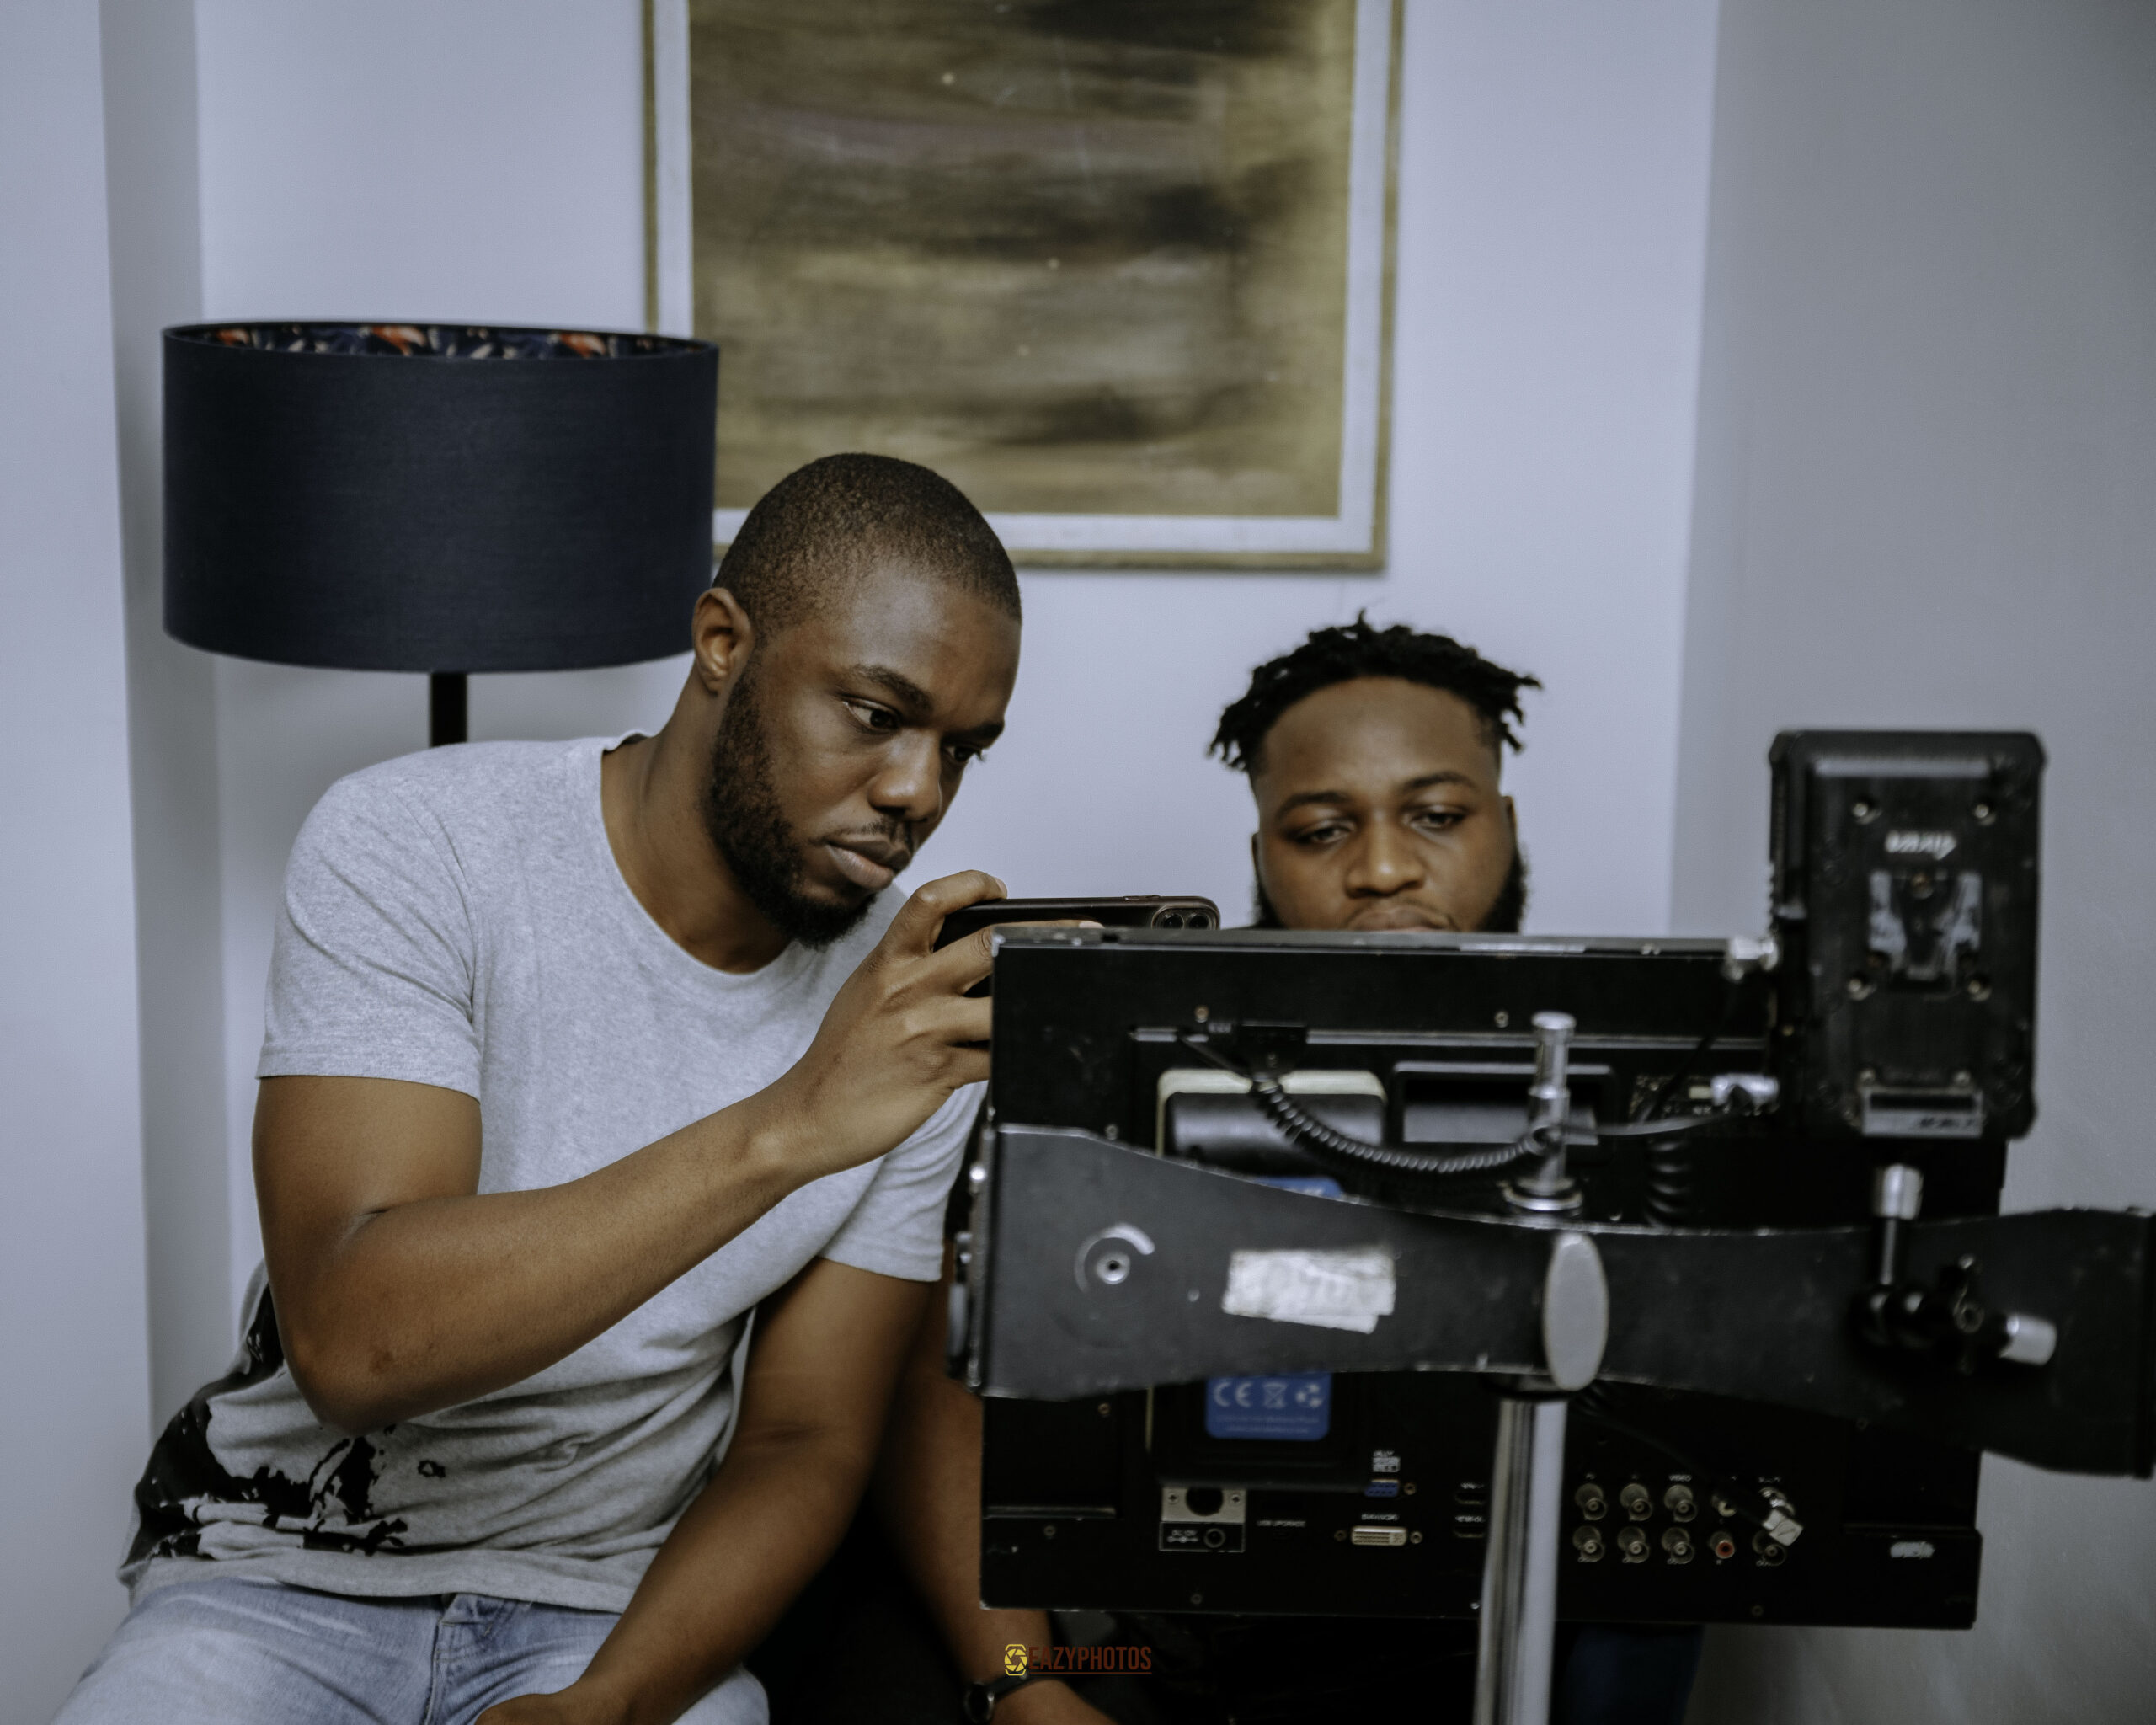 Abdul Tijani Ben nwokike insecure scaled - “Insecure” Begins Principal Photography, Benn Nwokike To Direct, Abdul Tijani Ahmed Producing